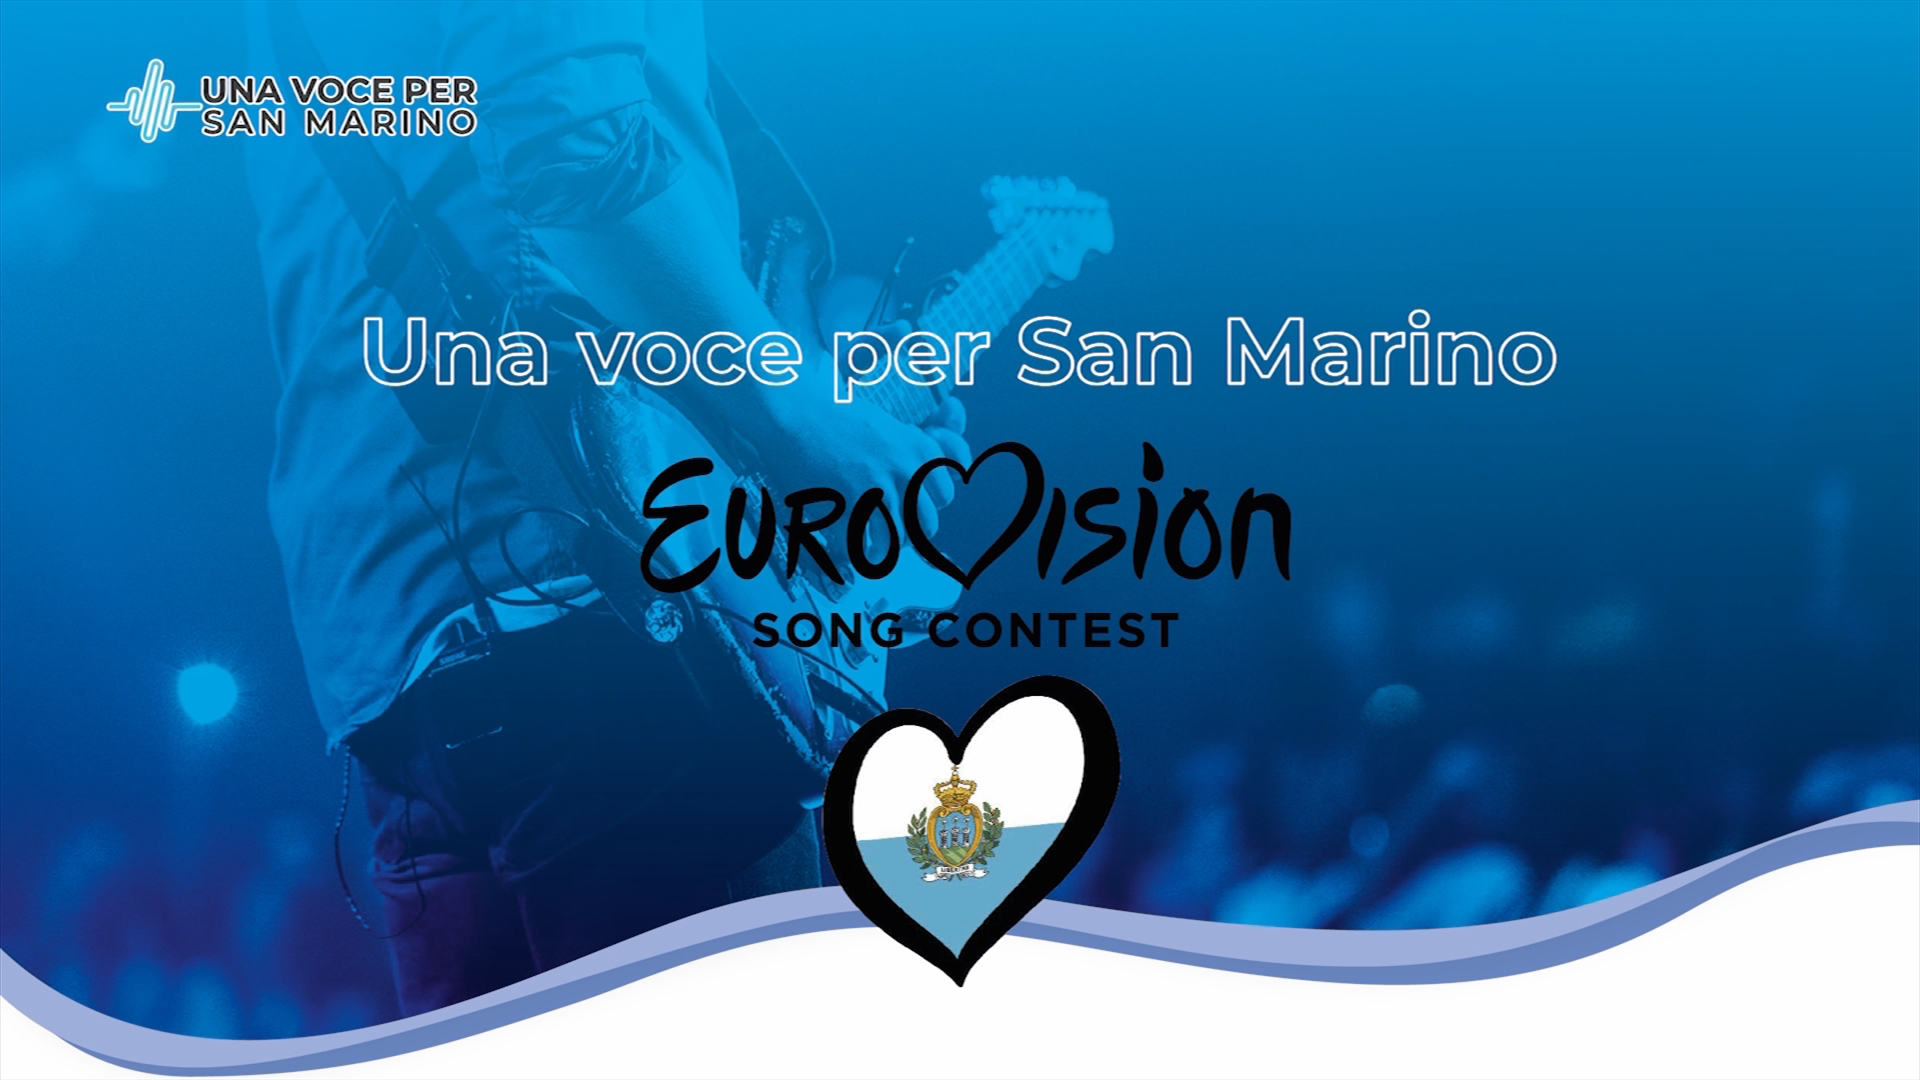 San Marino: Preliminary confirmation of “Una voce per San Marino” as national selection for Eurovision 2023